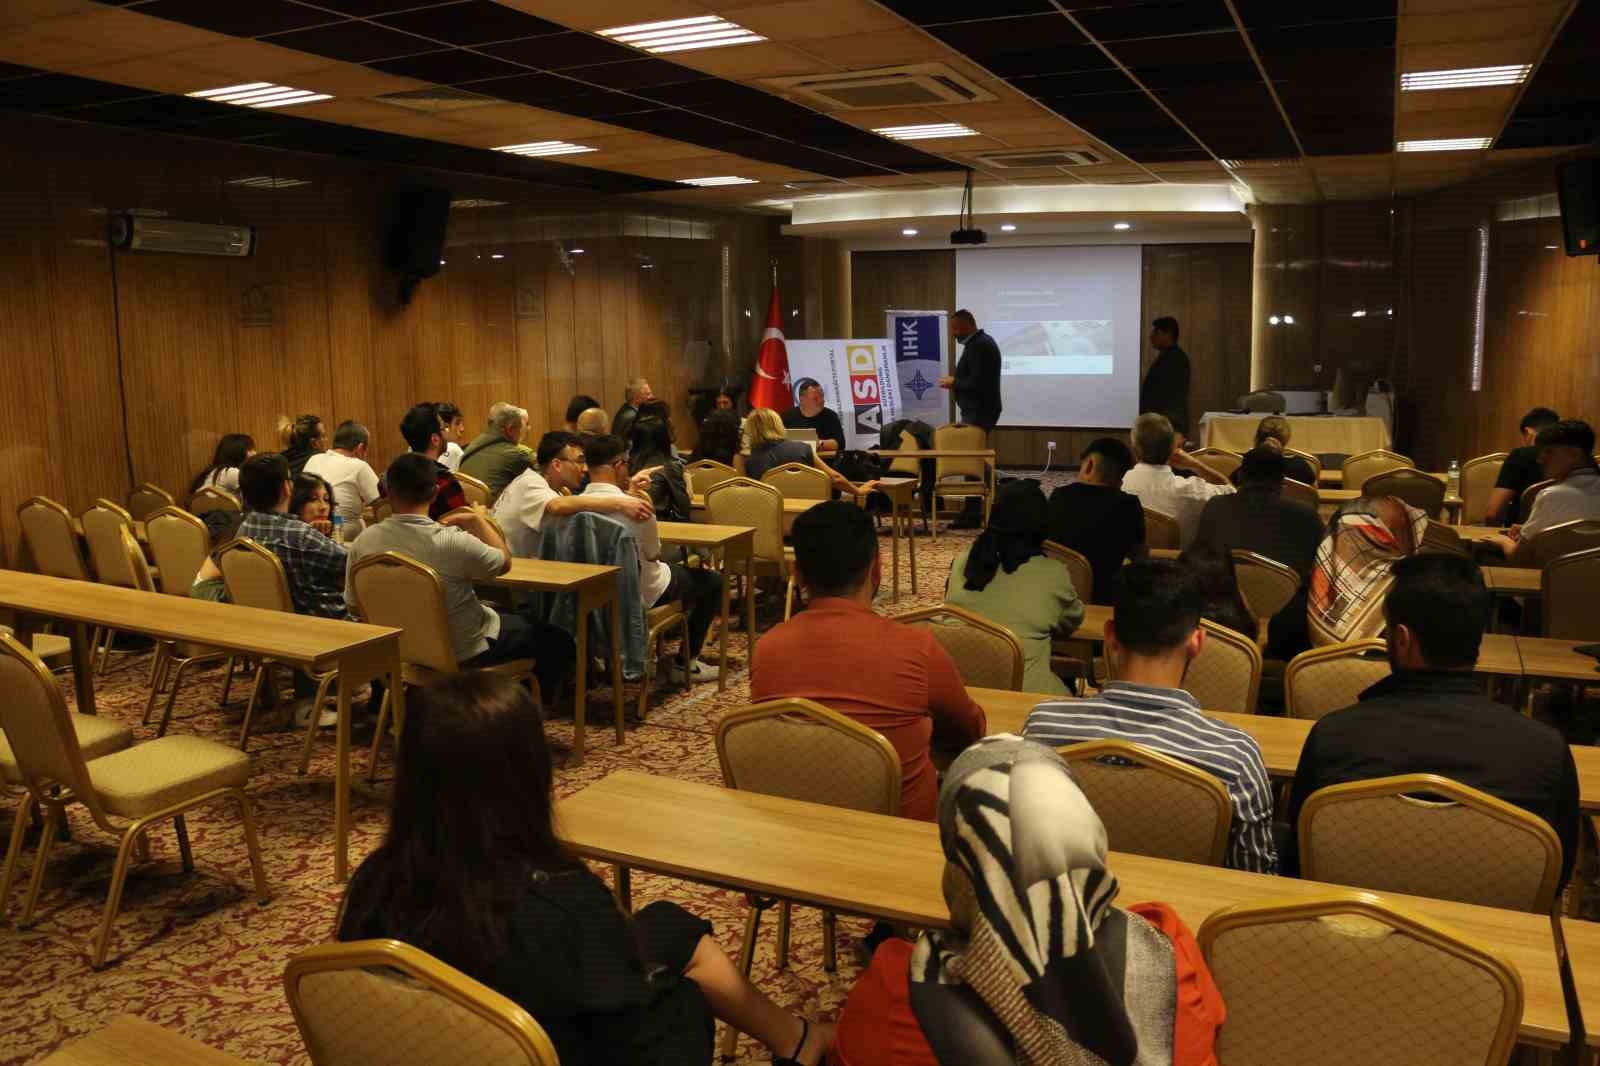 Elazığ’da "Ausbildung" semineri düzenlendi
